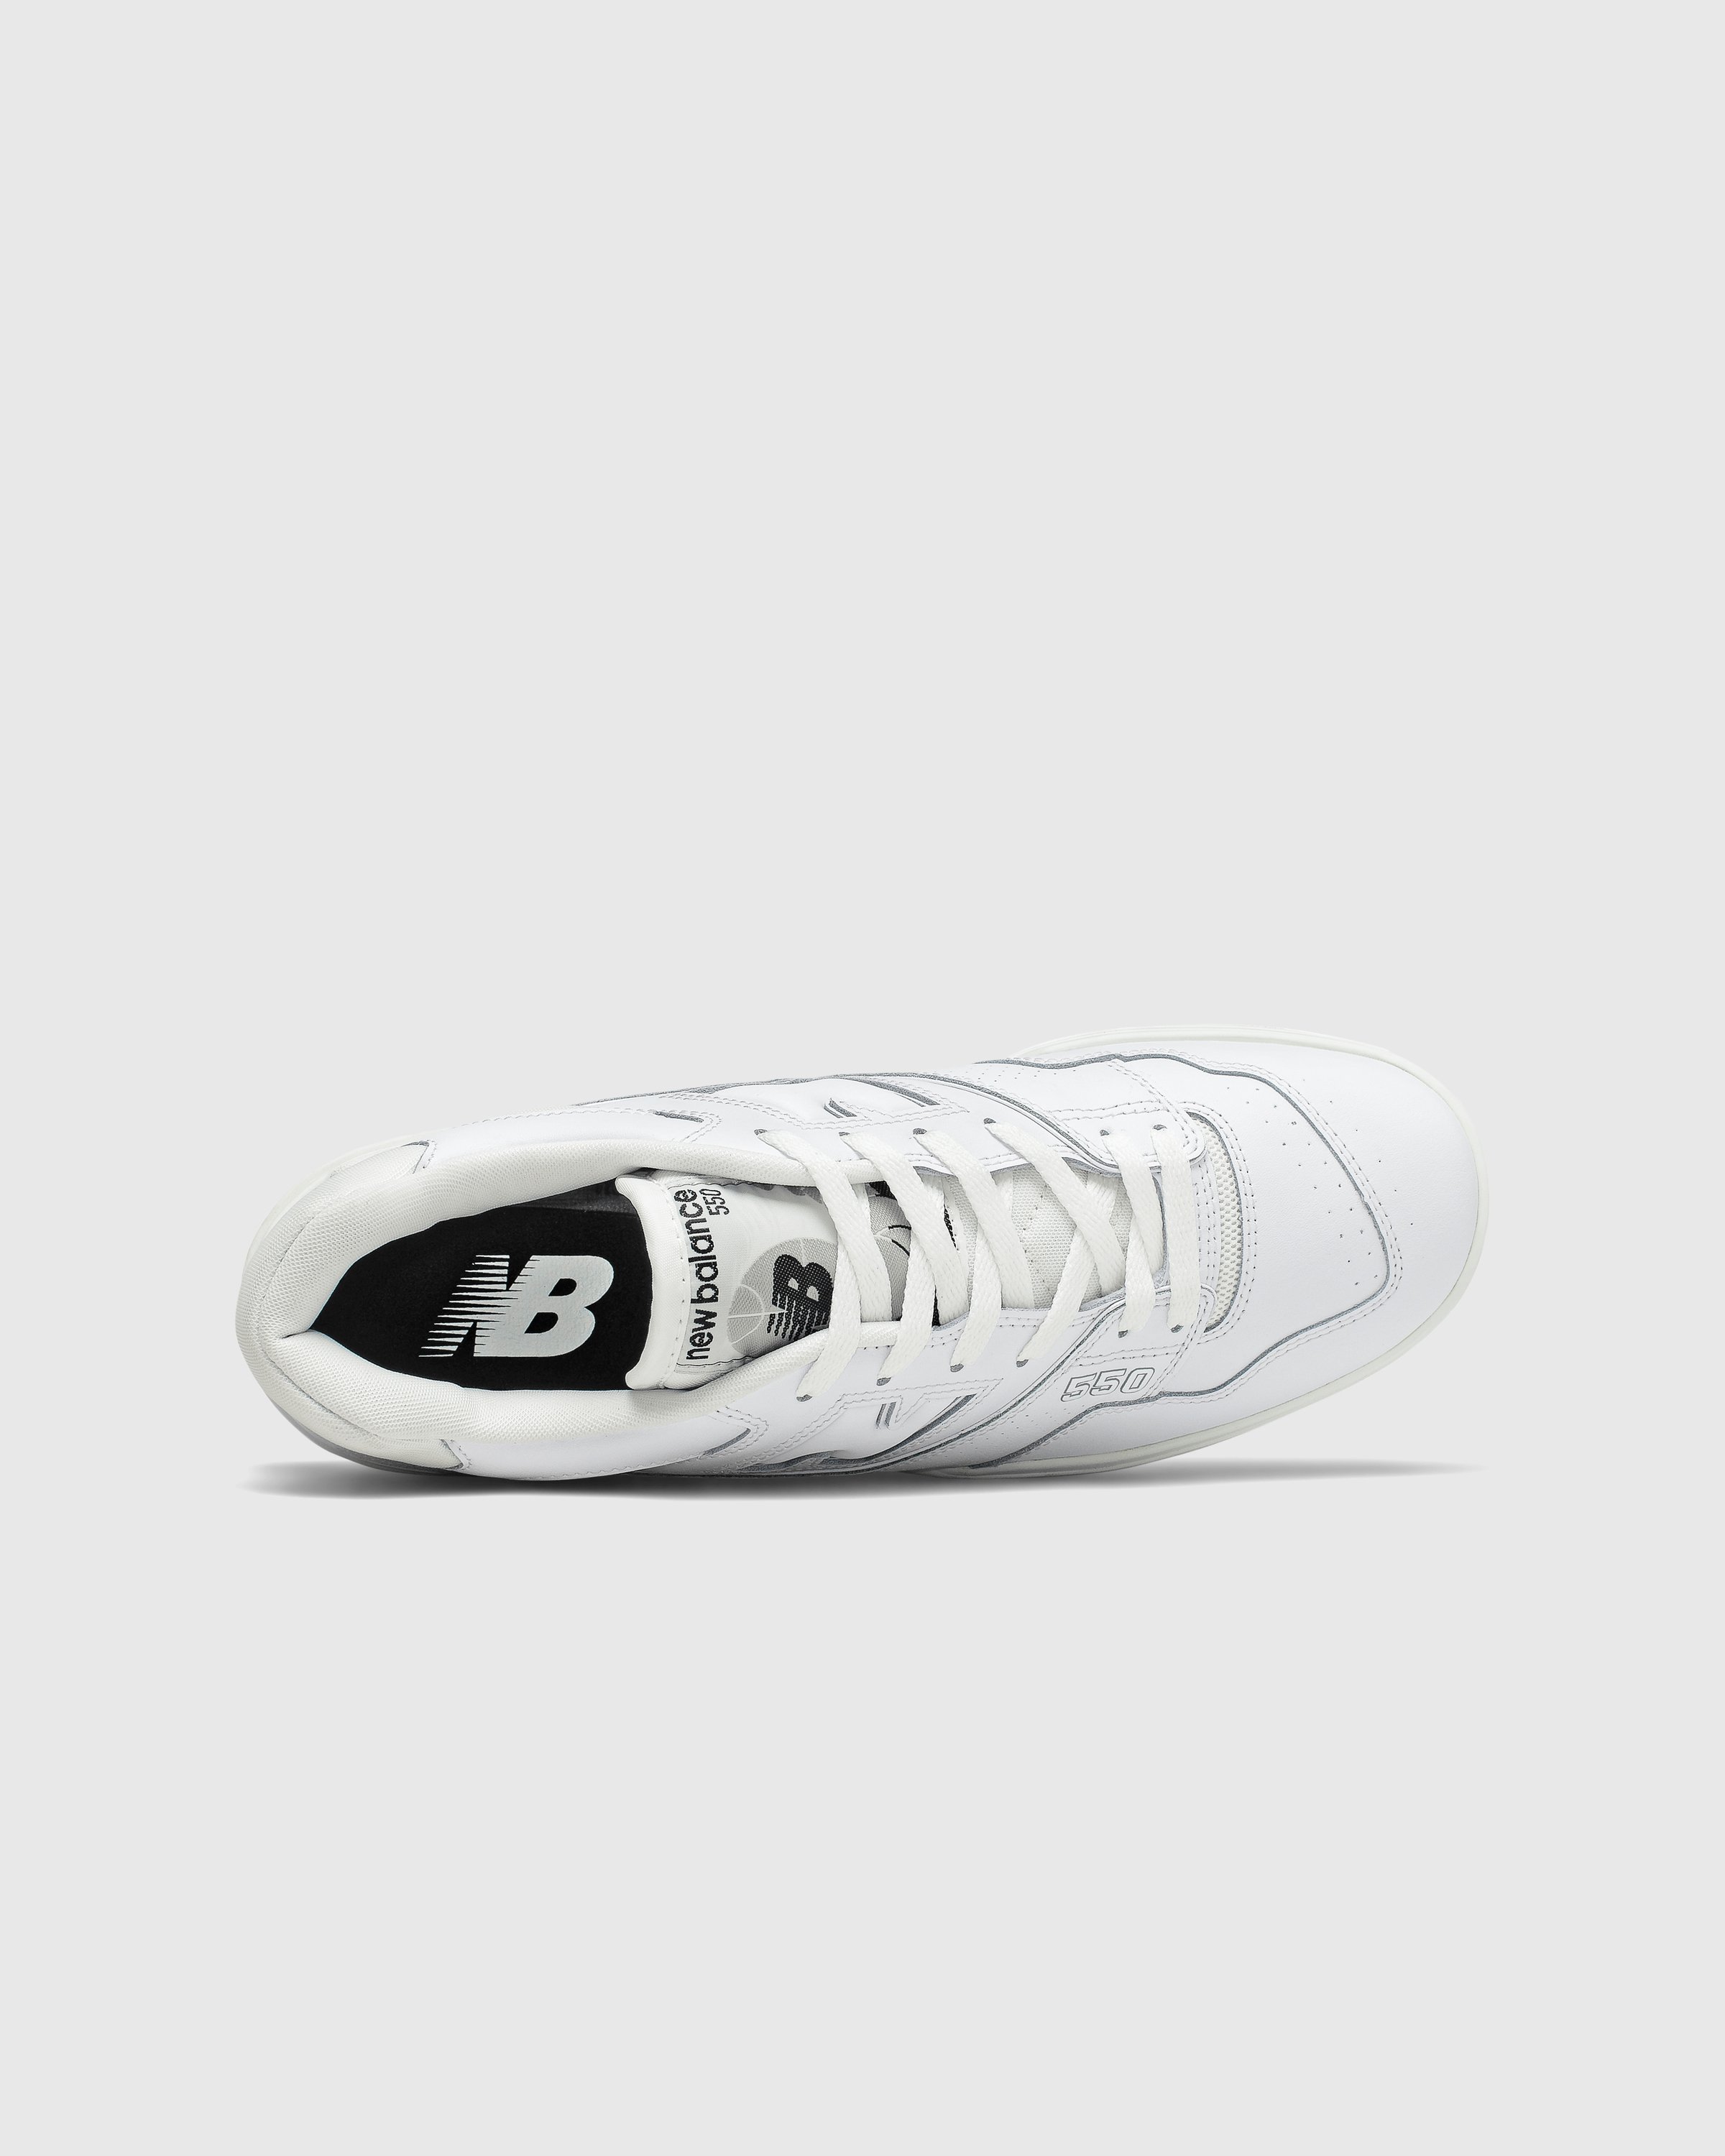 New Balance - BB550PB1 White - Footwear - White - Image 4